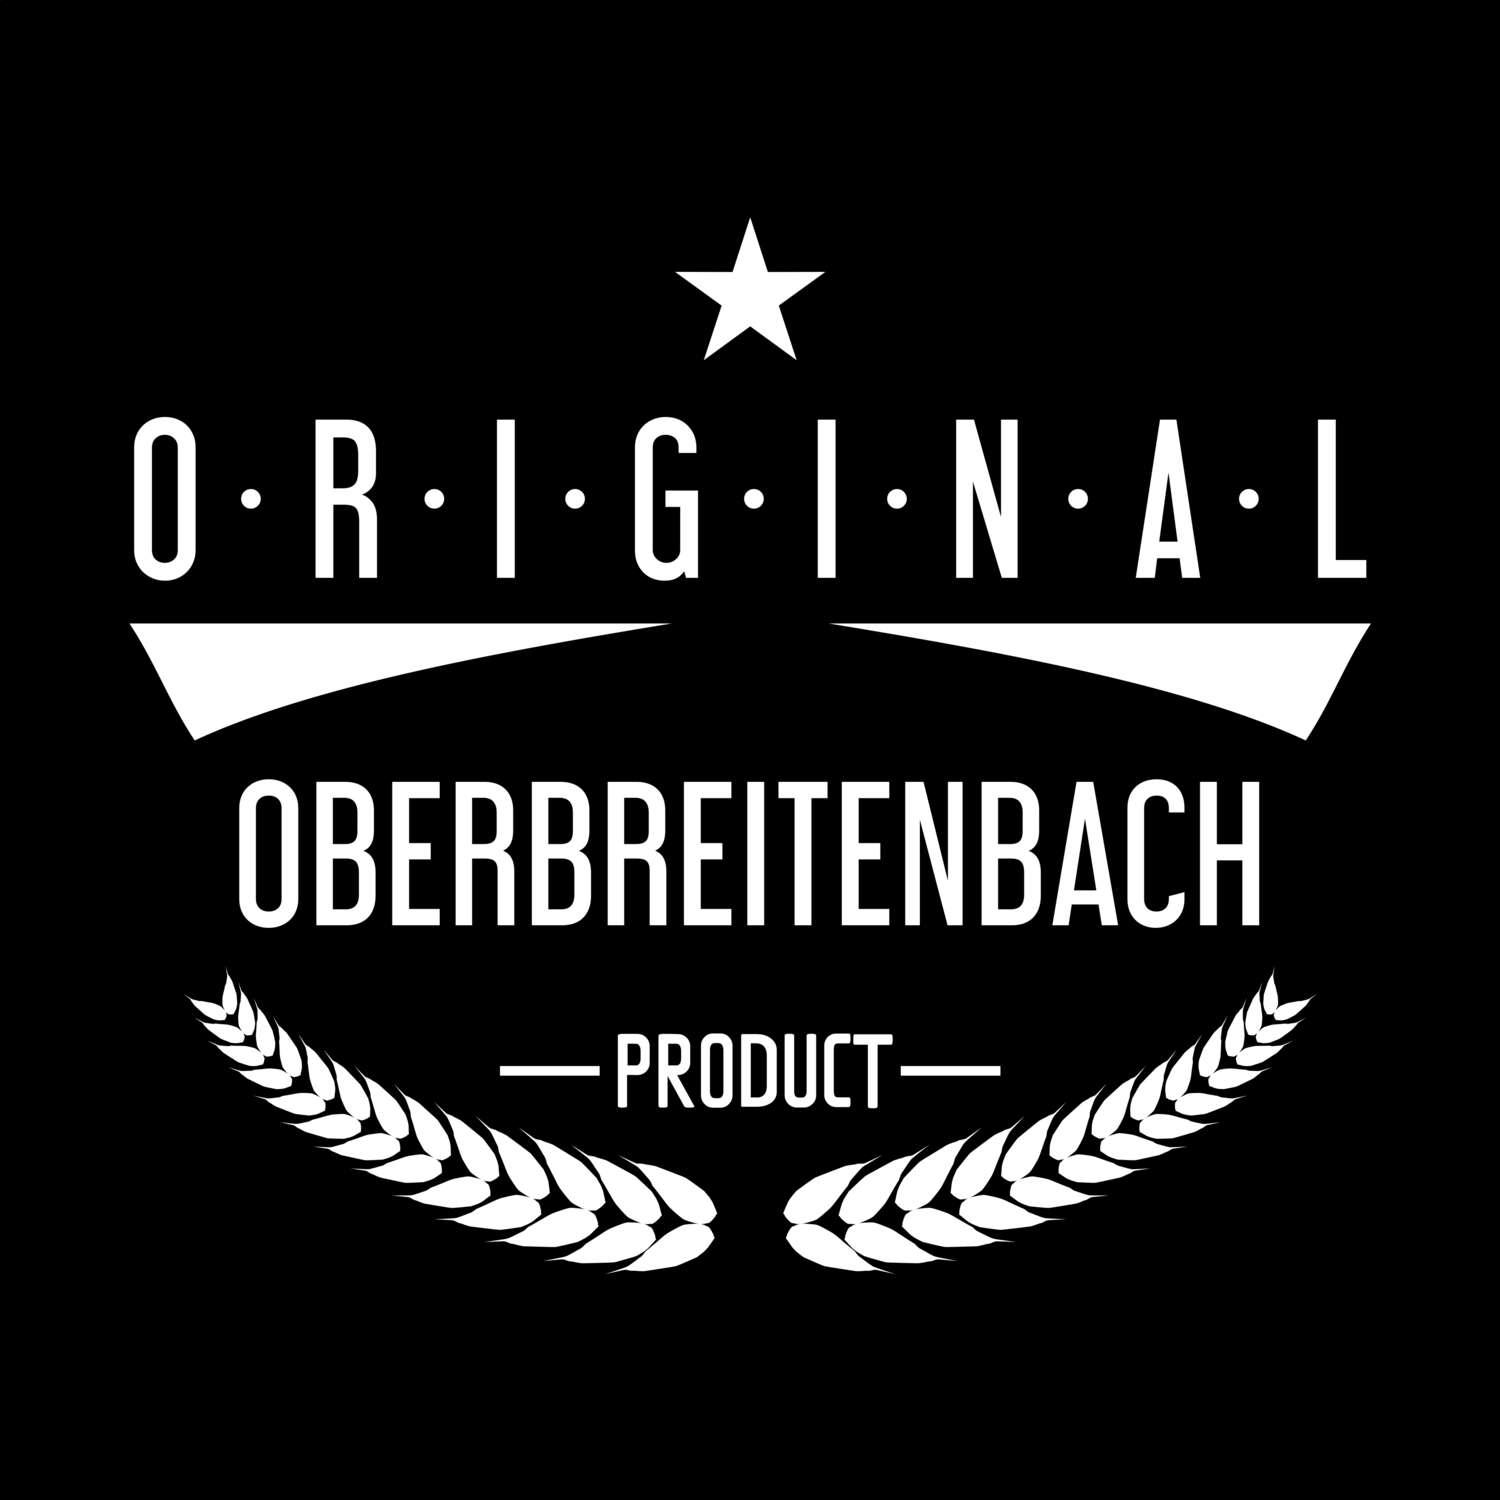 Oberbreitenbach T-Shirt »Original Product«